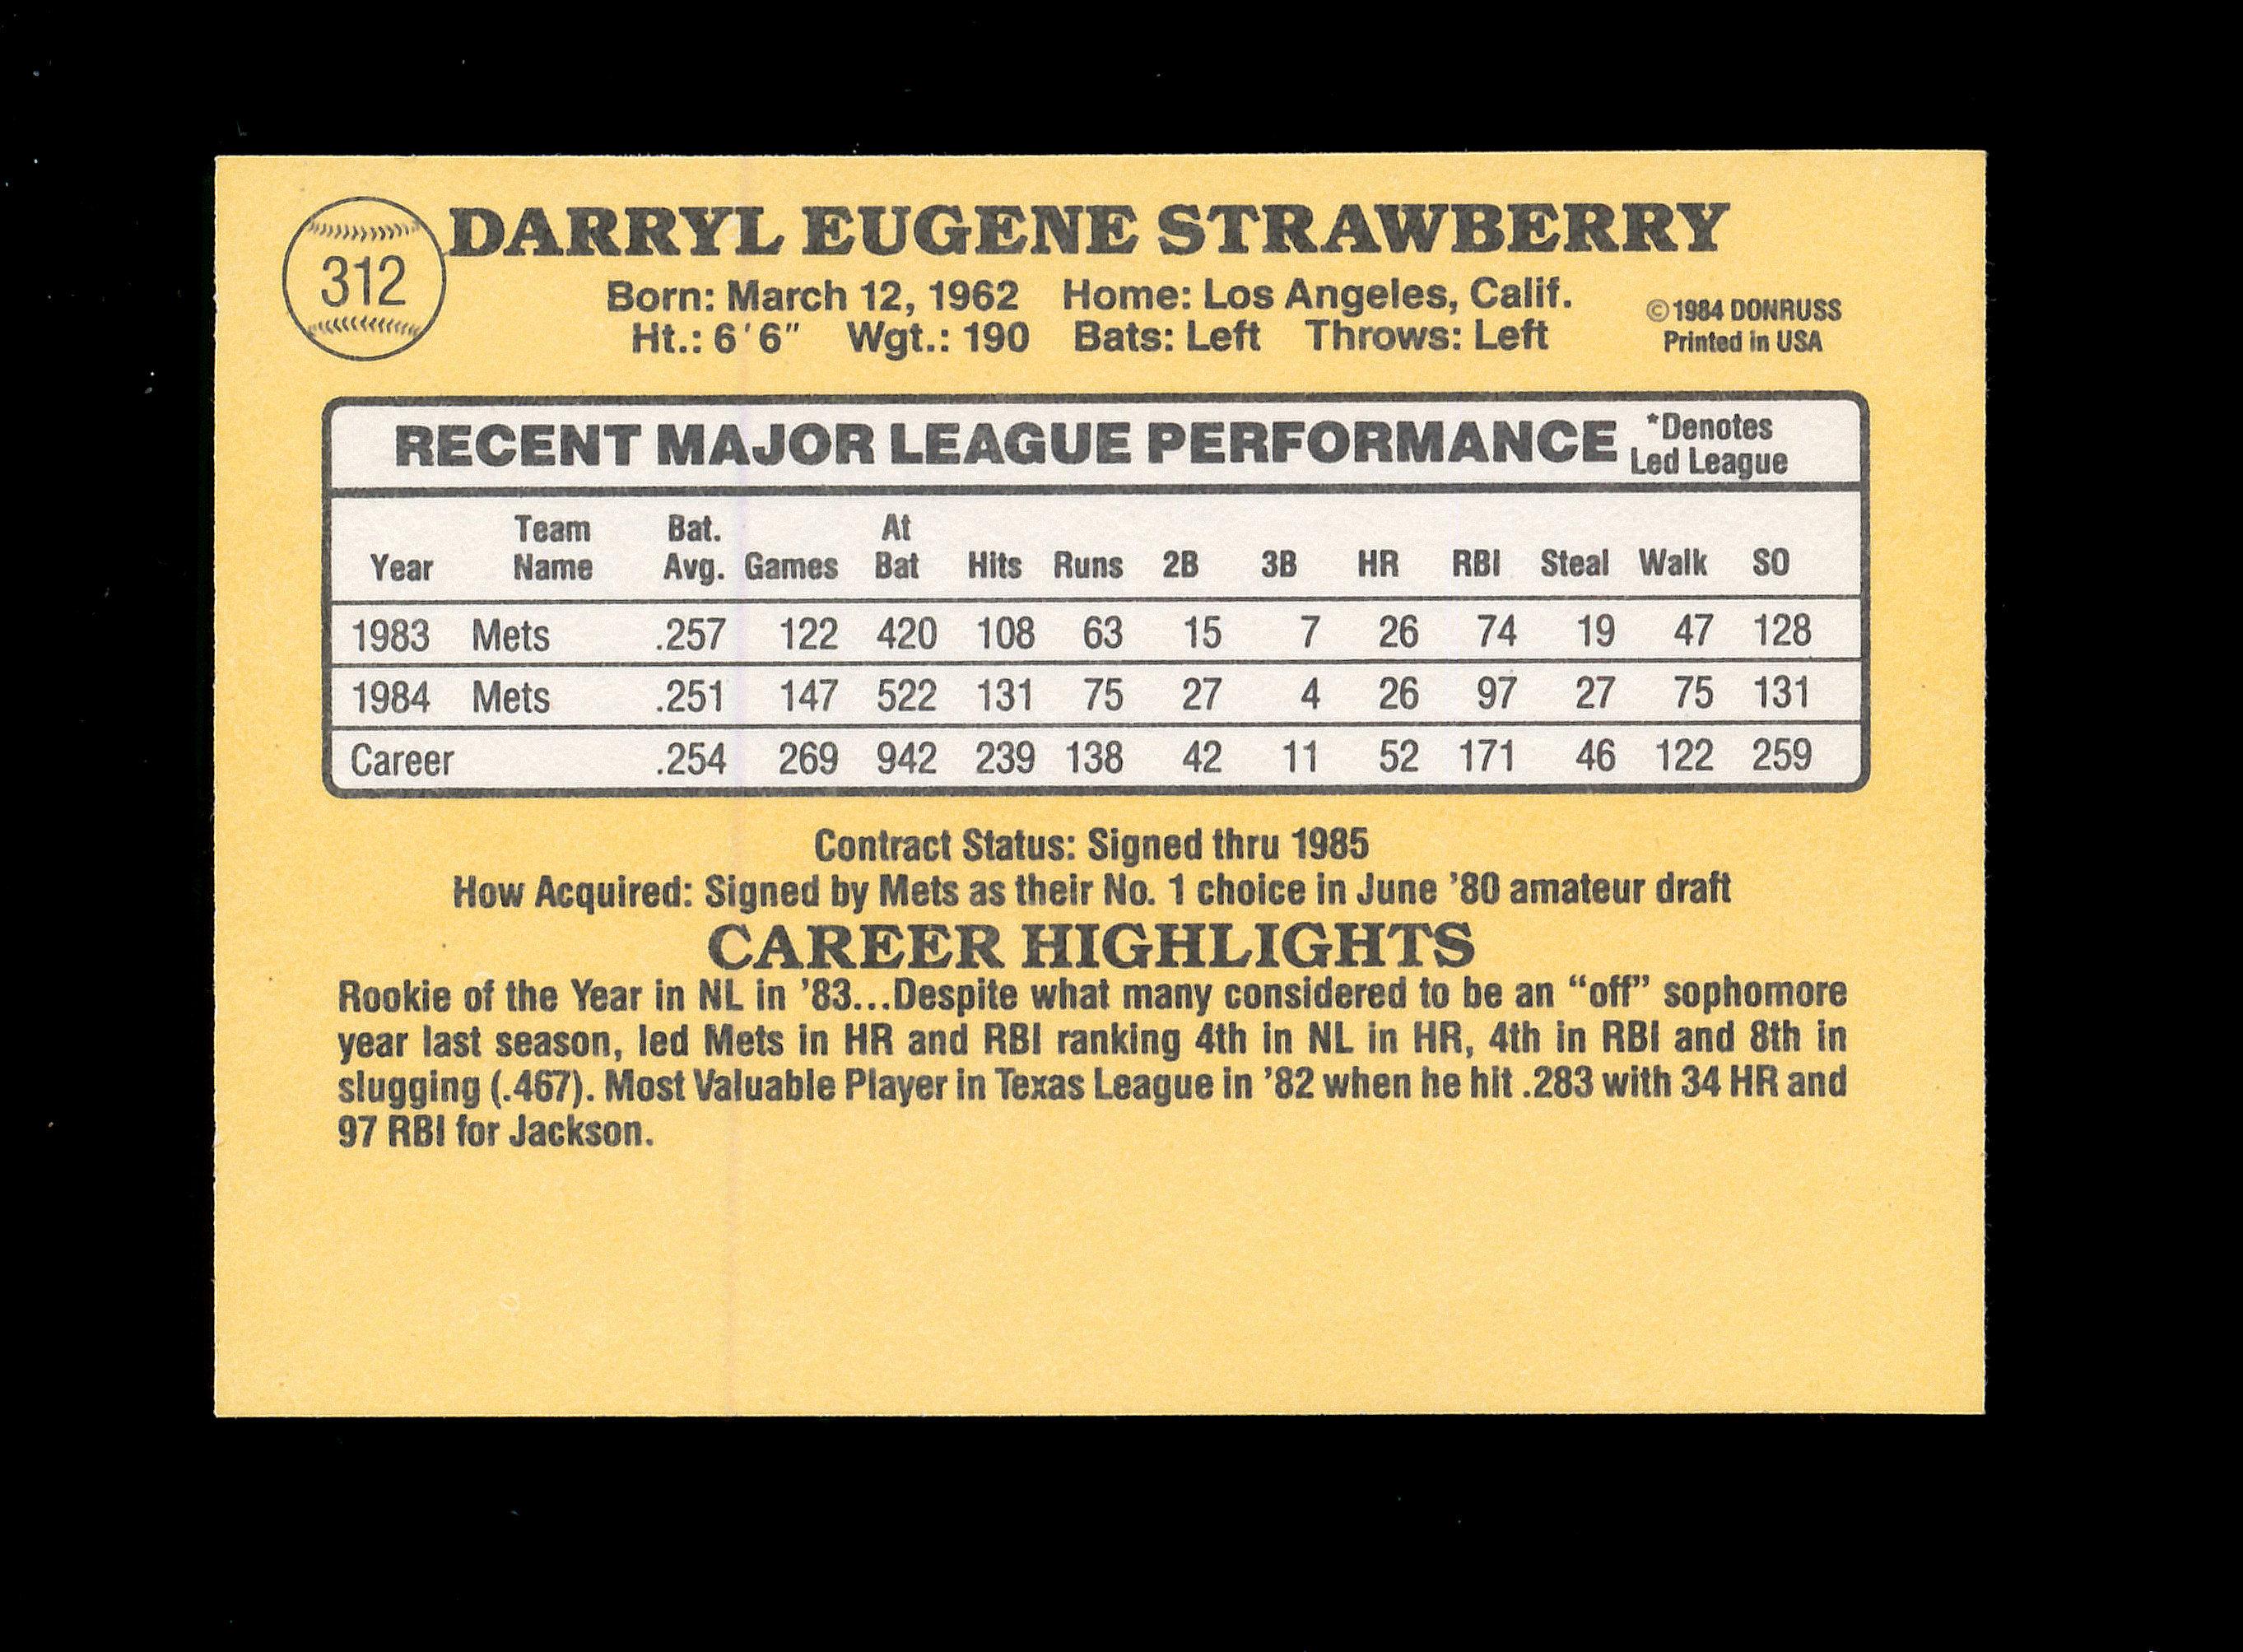 1985 Donruss Baseball Card #312 Darryl Strawberry New York Mets. NM to NM-M